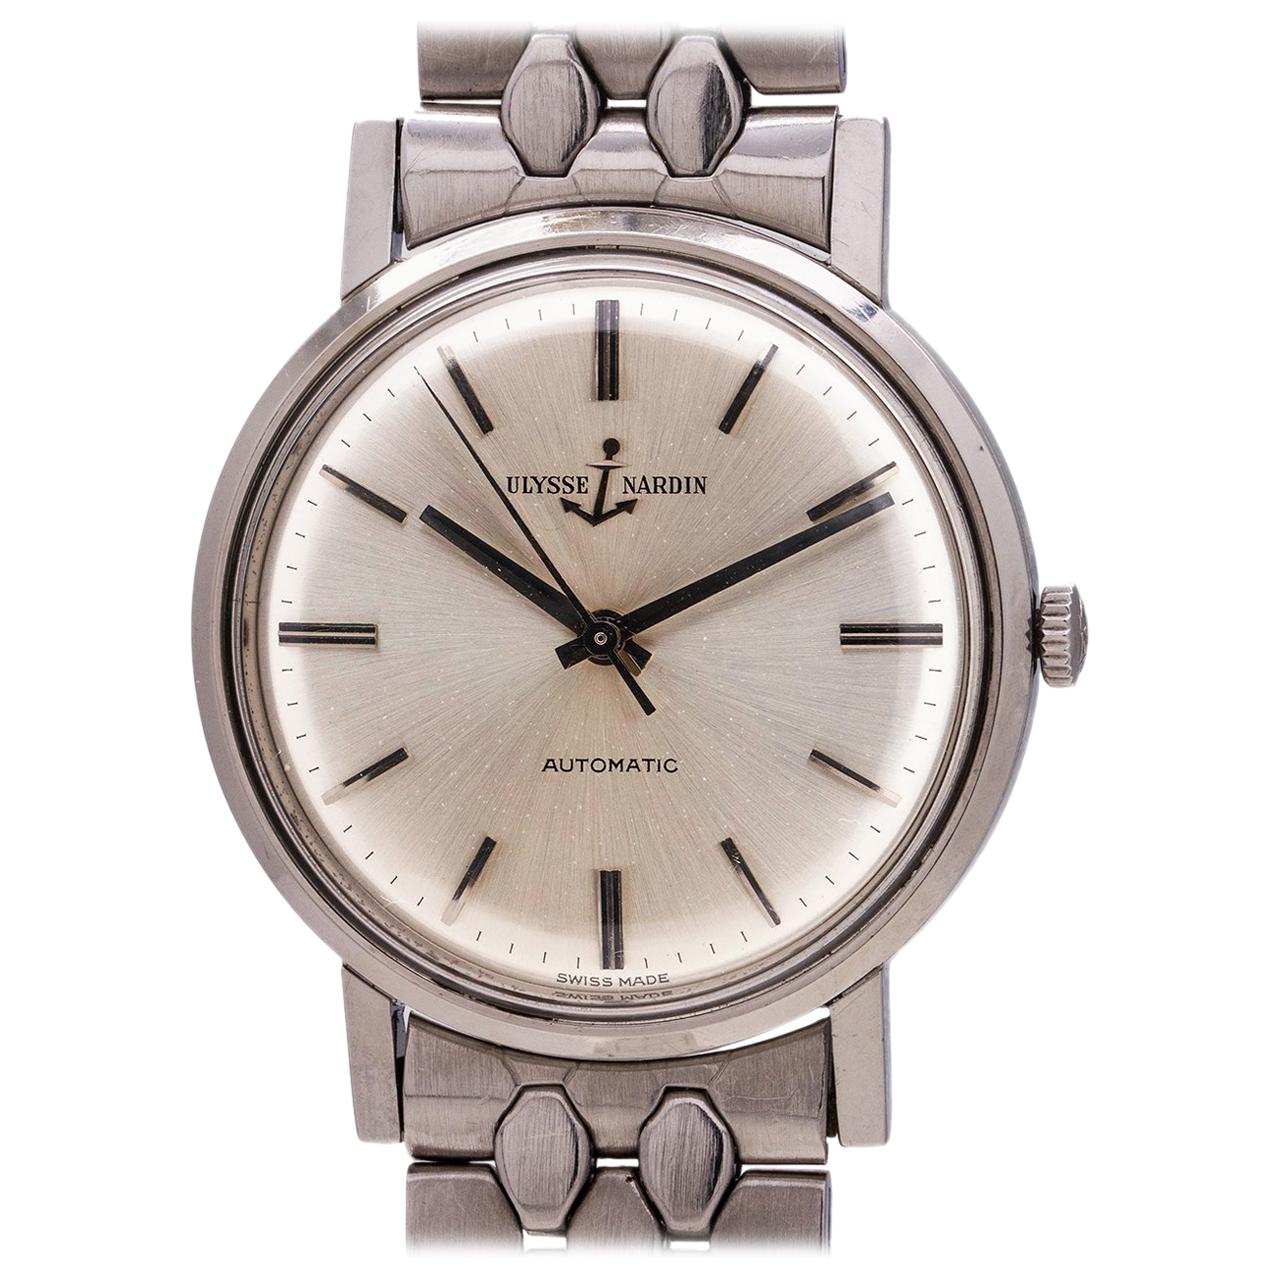 Ulysse Nardin Stainless Steel Automatic wristwatch Ref 10528/1, circa 1960s